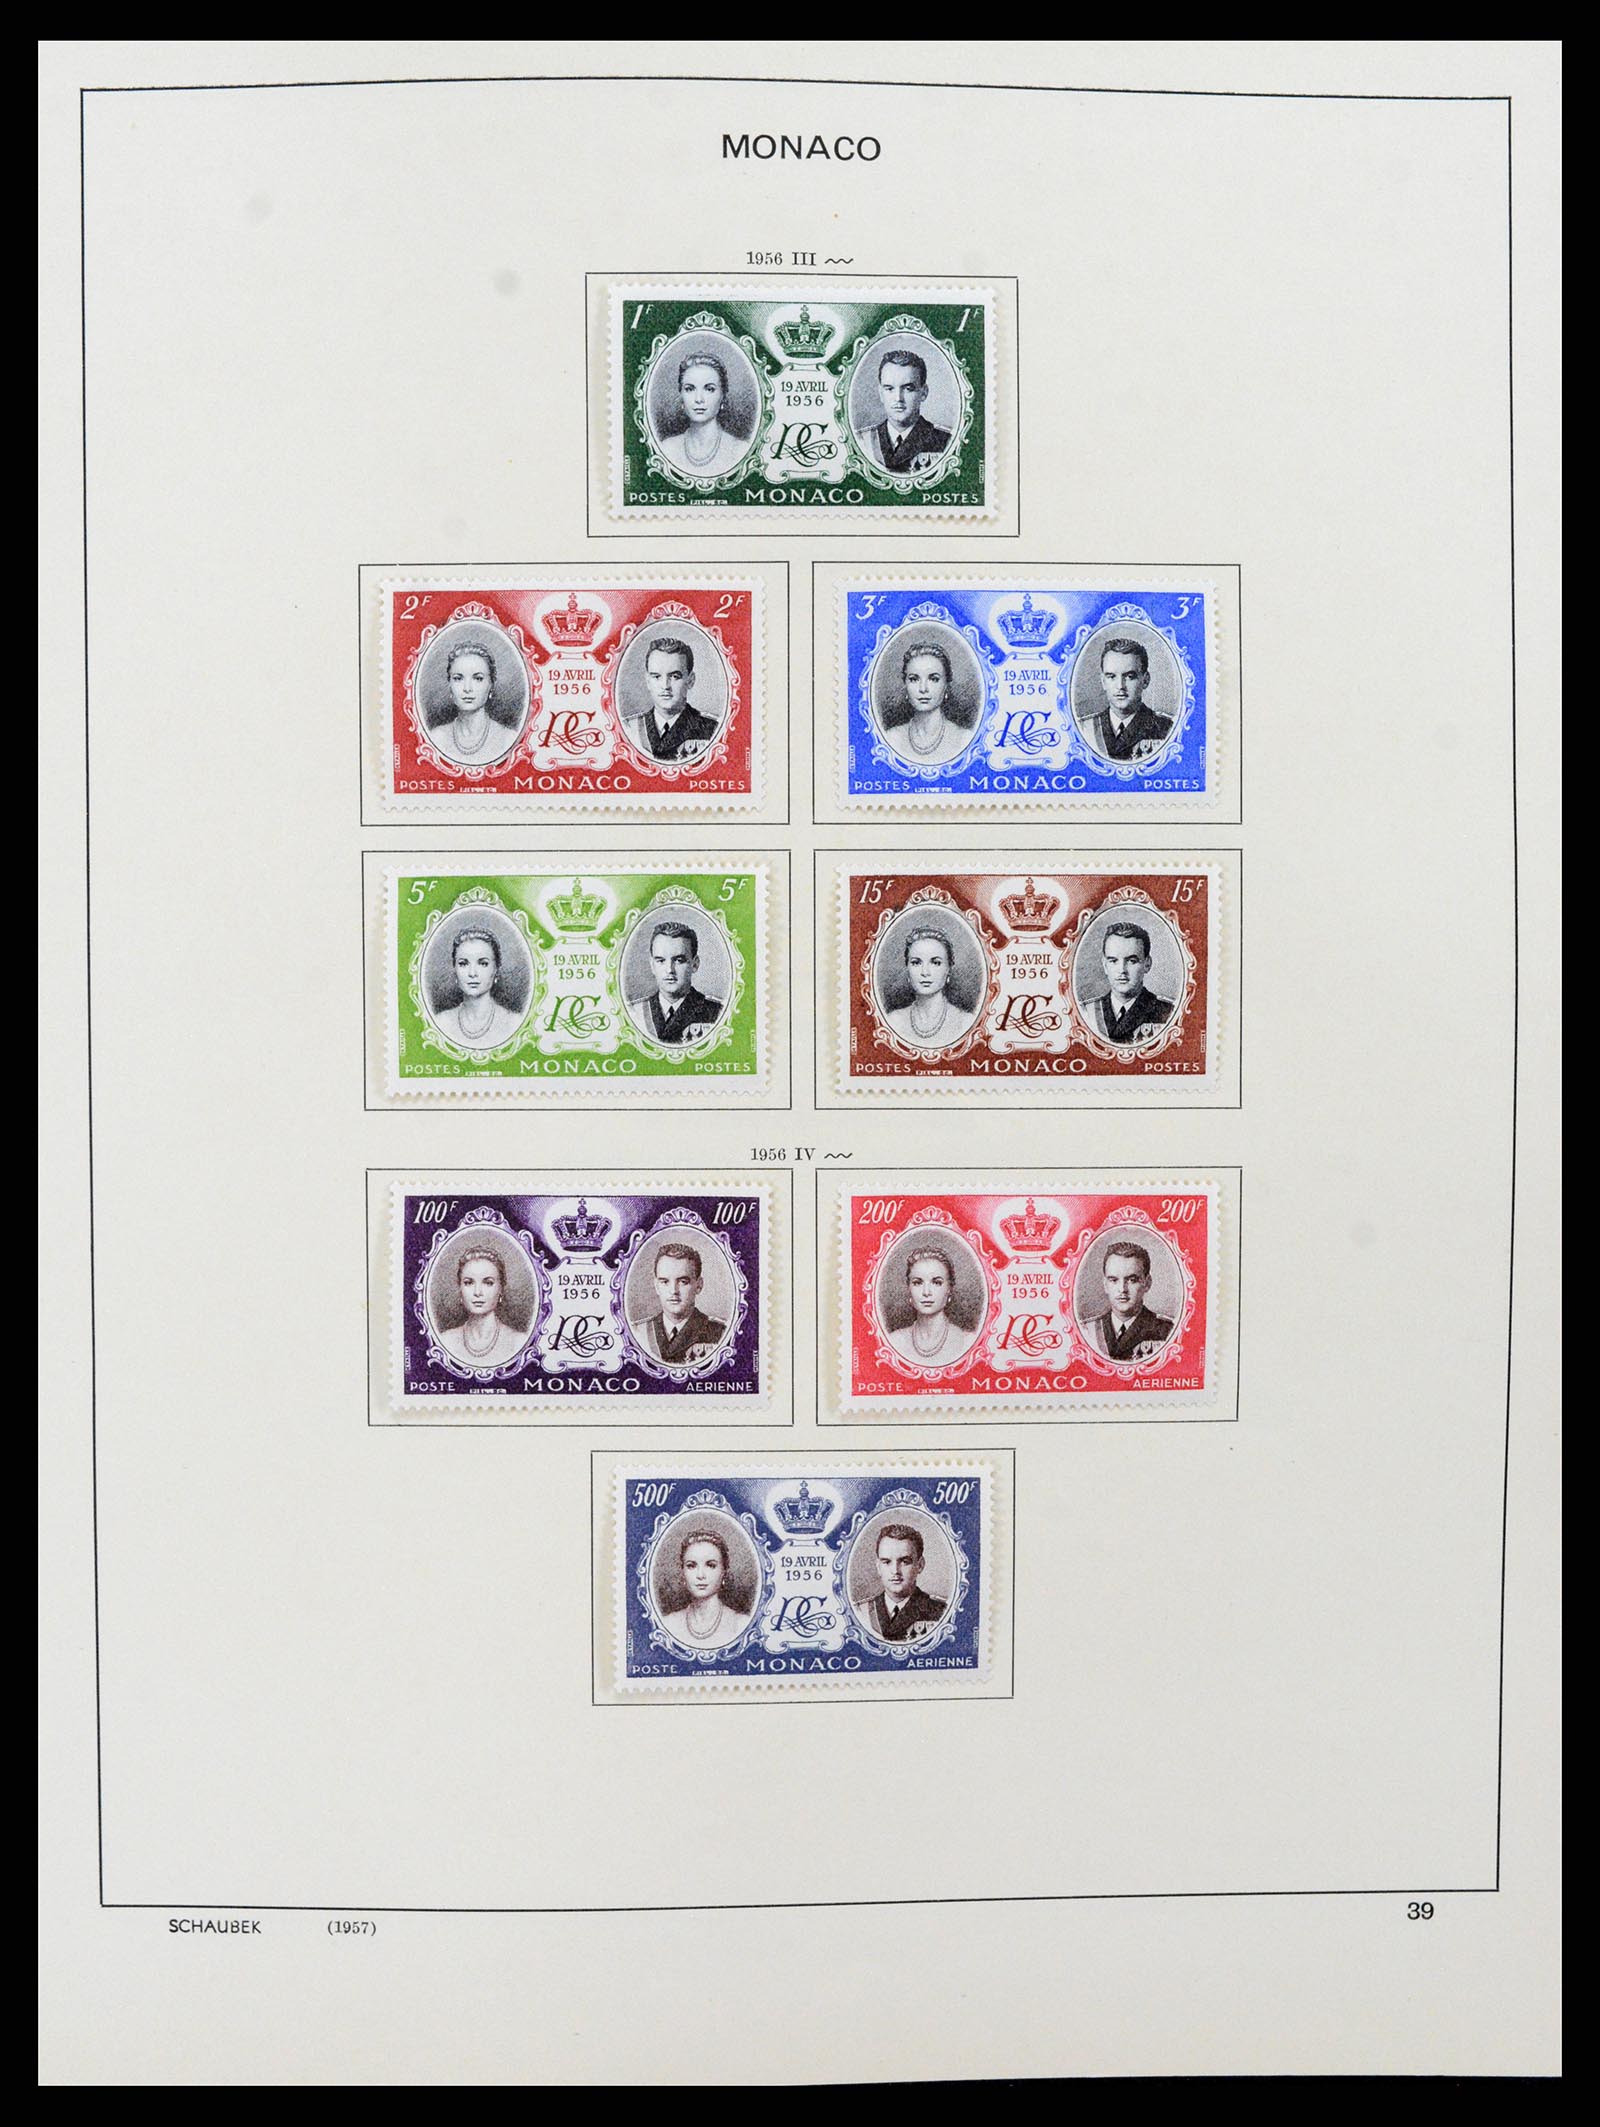 37570 044 - Stamp collection 37570 Monaco 1885-2013.